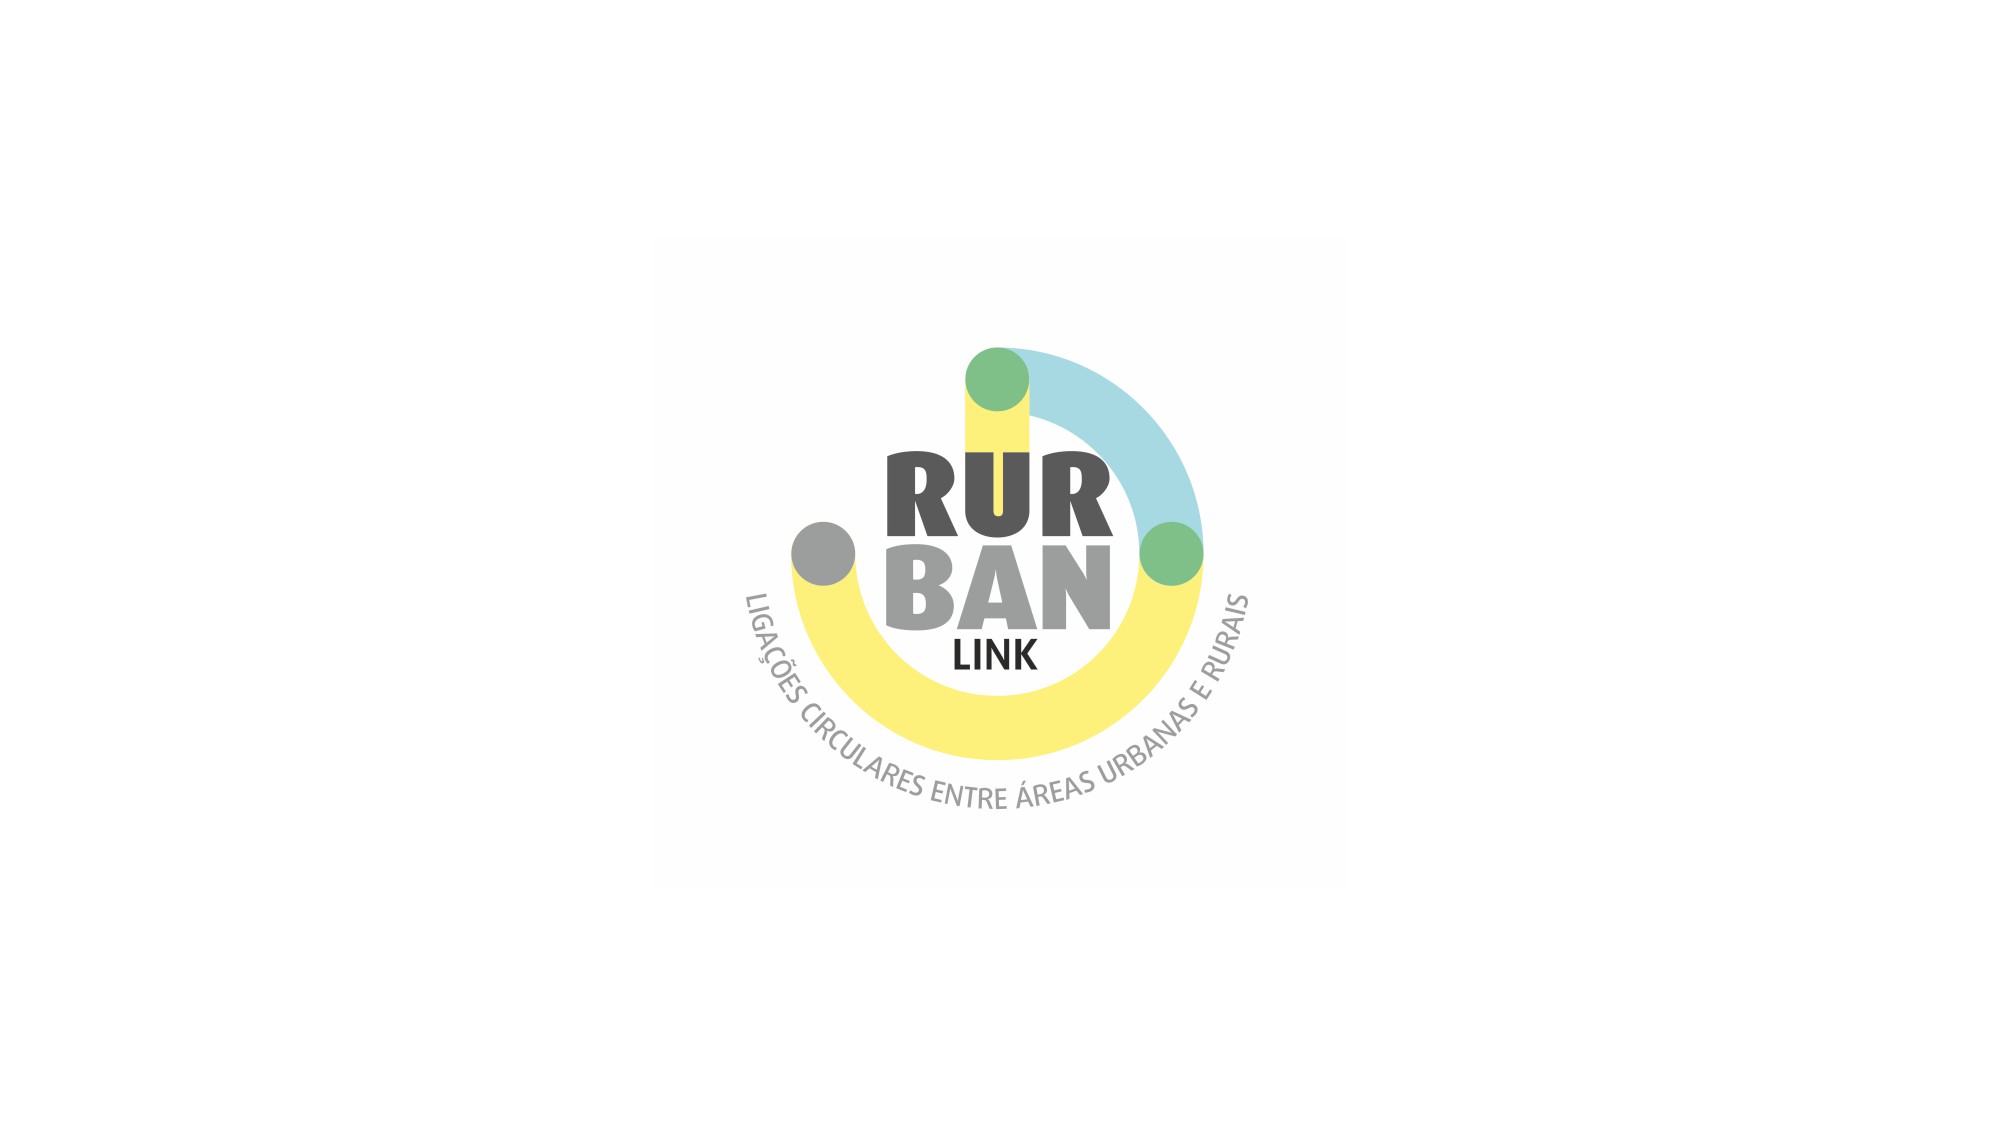 RURBAN Link. Economia circular